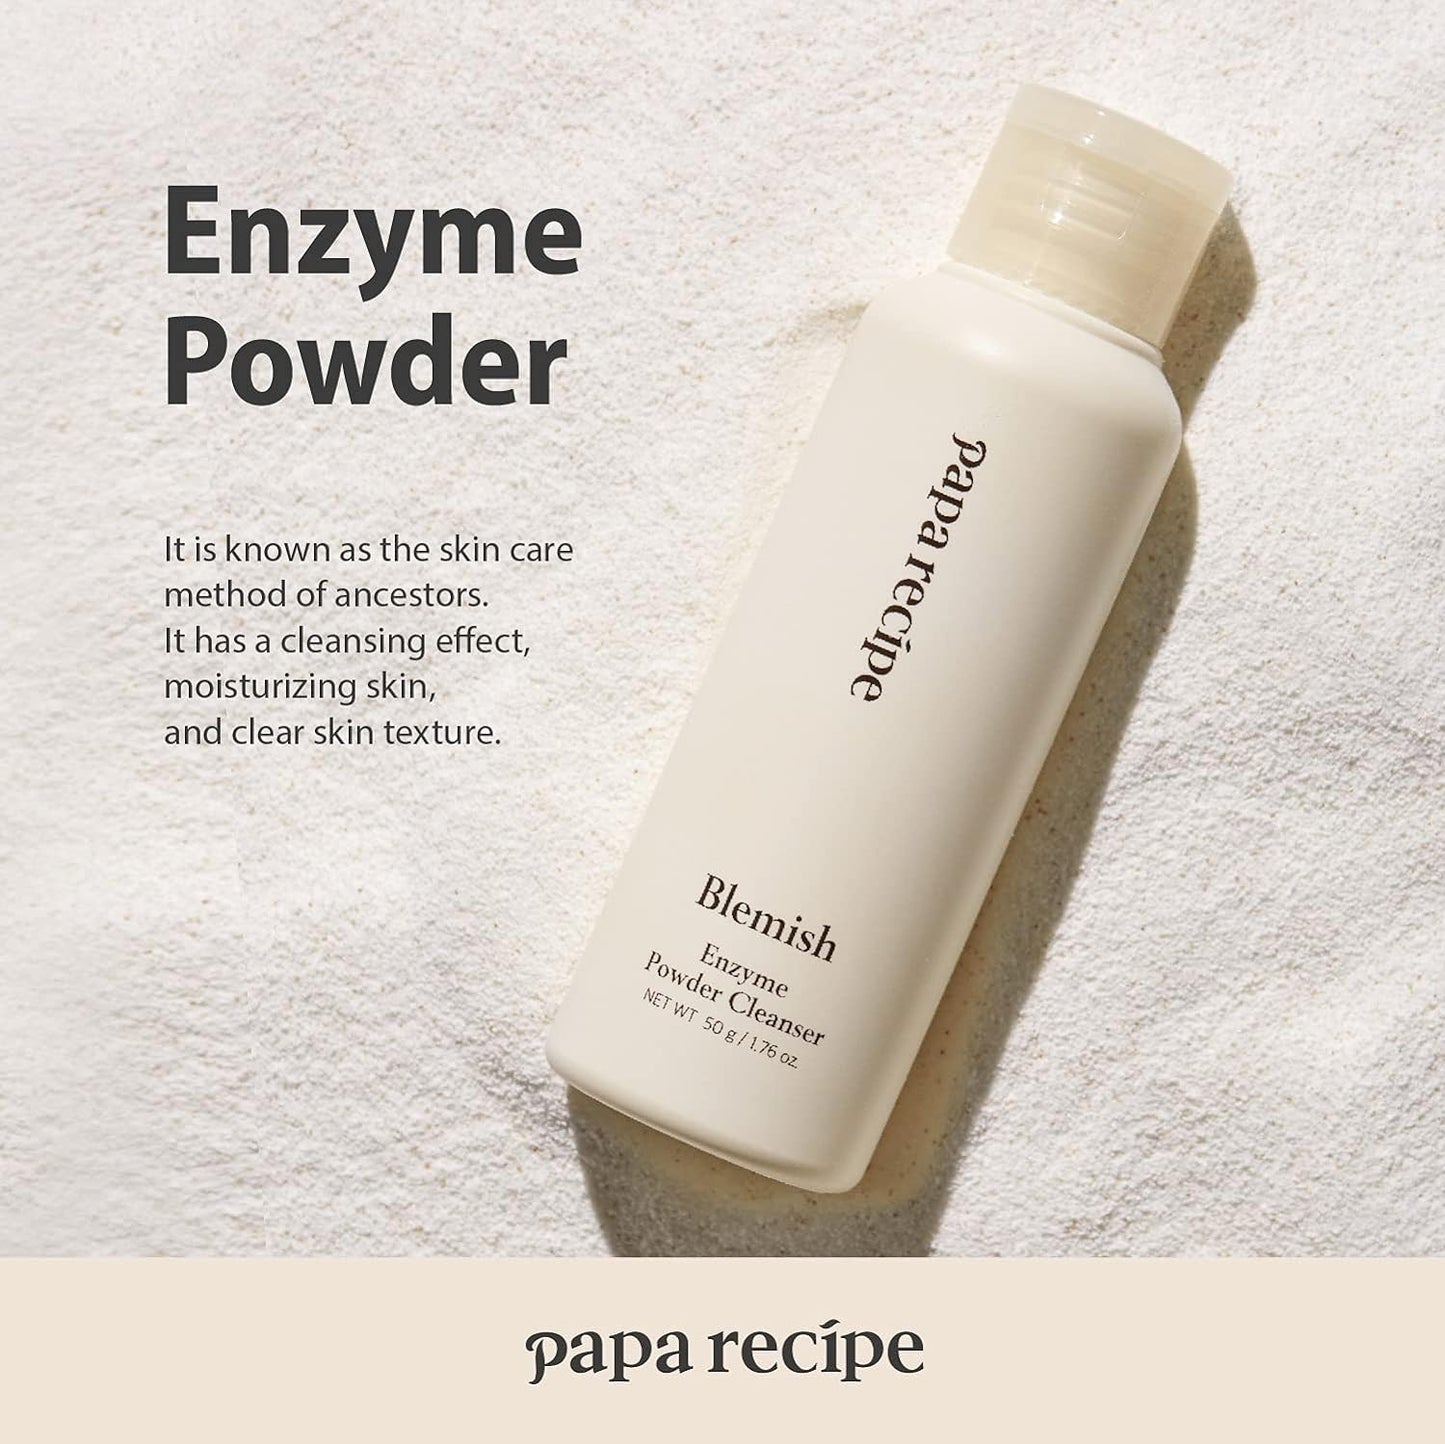 Papa Recipe Blemish Enzyme Powder Cleanser 50g